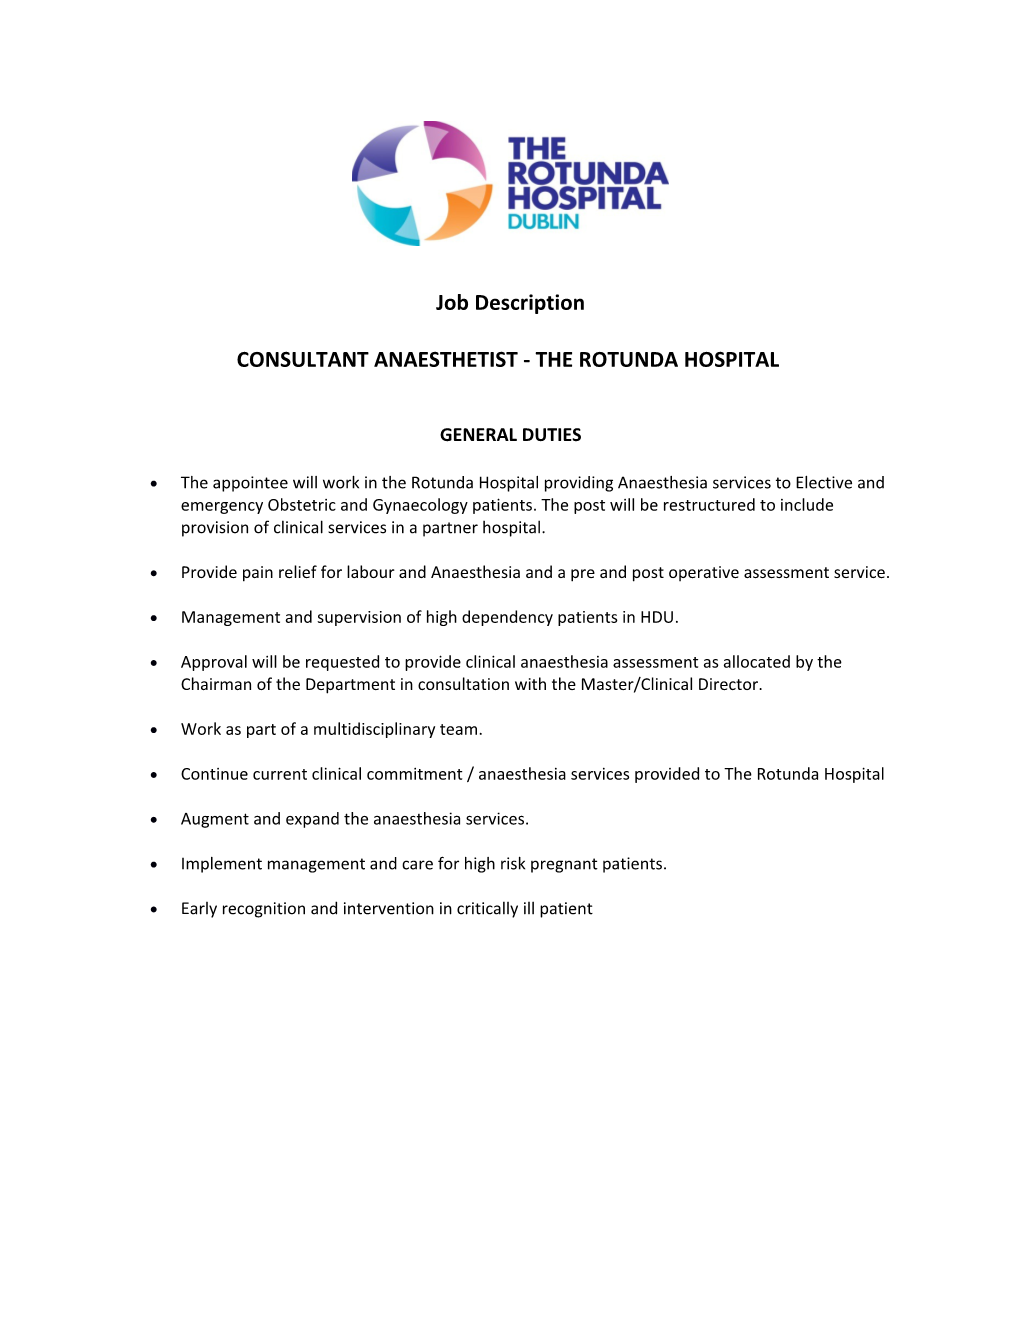 Consultant Anaesthetist - the Rotunda Hospital